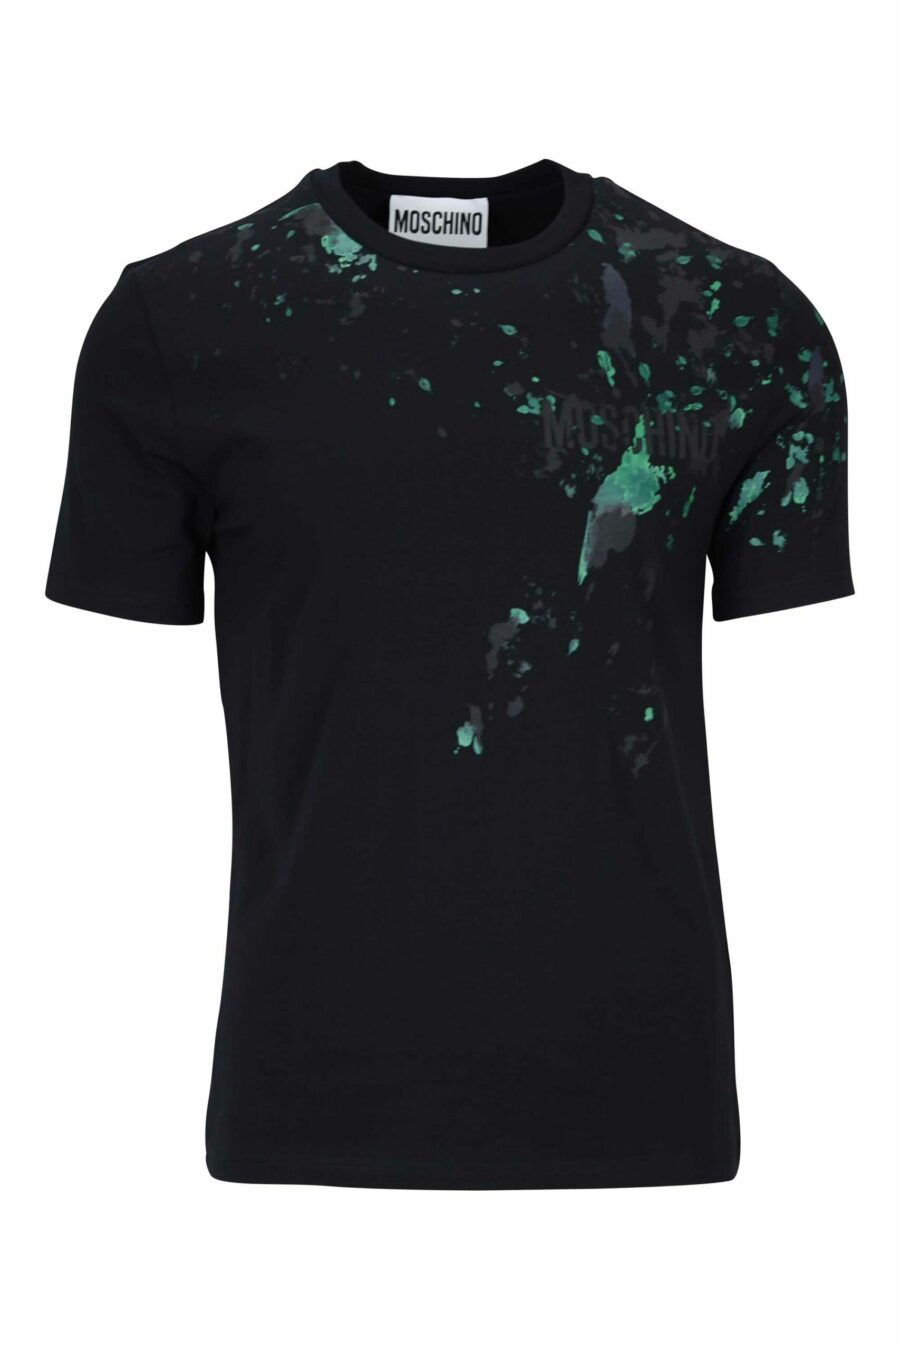 T-shirt preta com minilogo "couture milano" com "splash" multicolorido - 667113392721 scaled